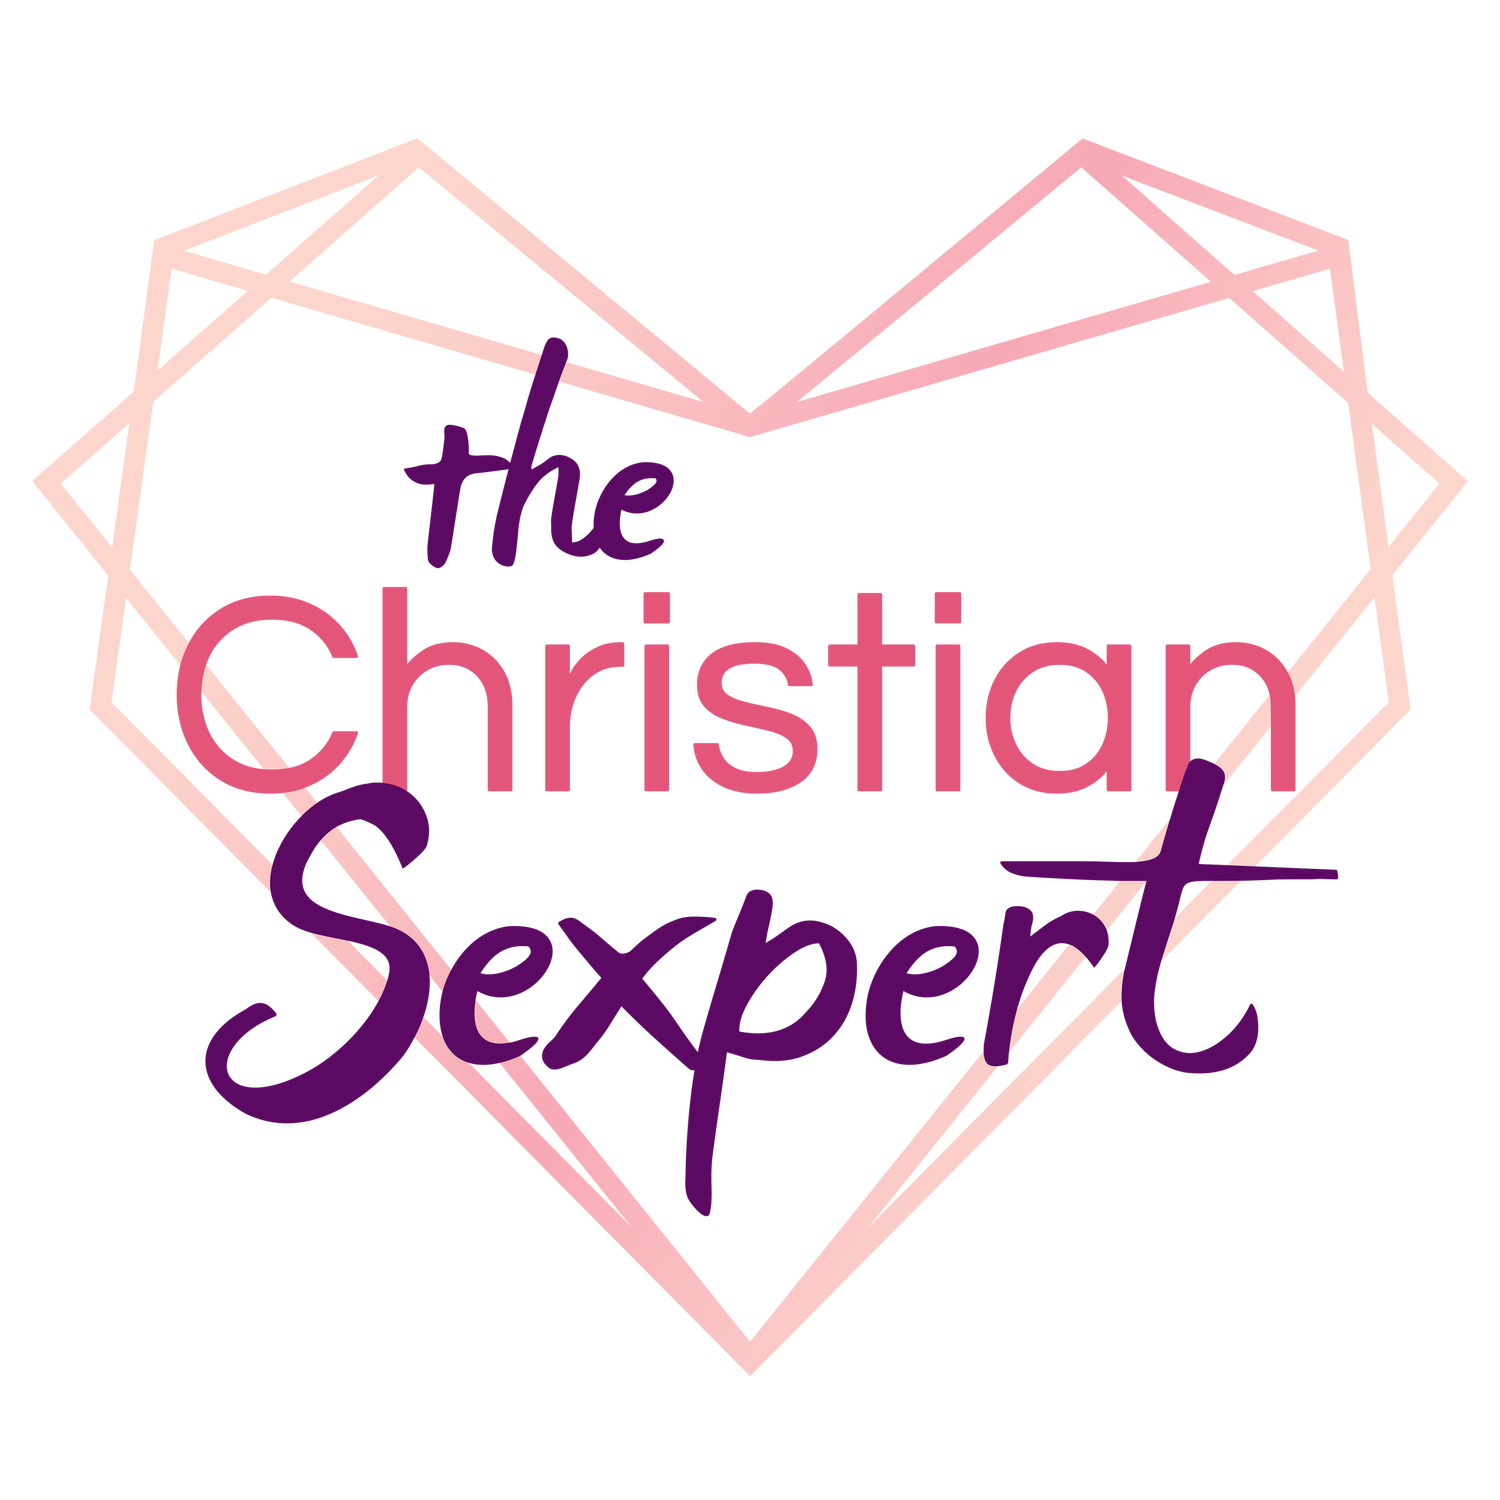 The Christian Sexpert